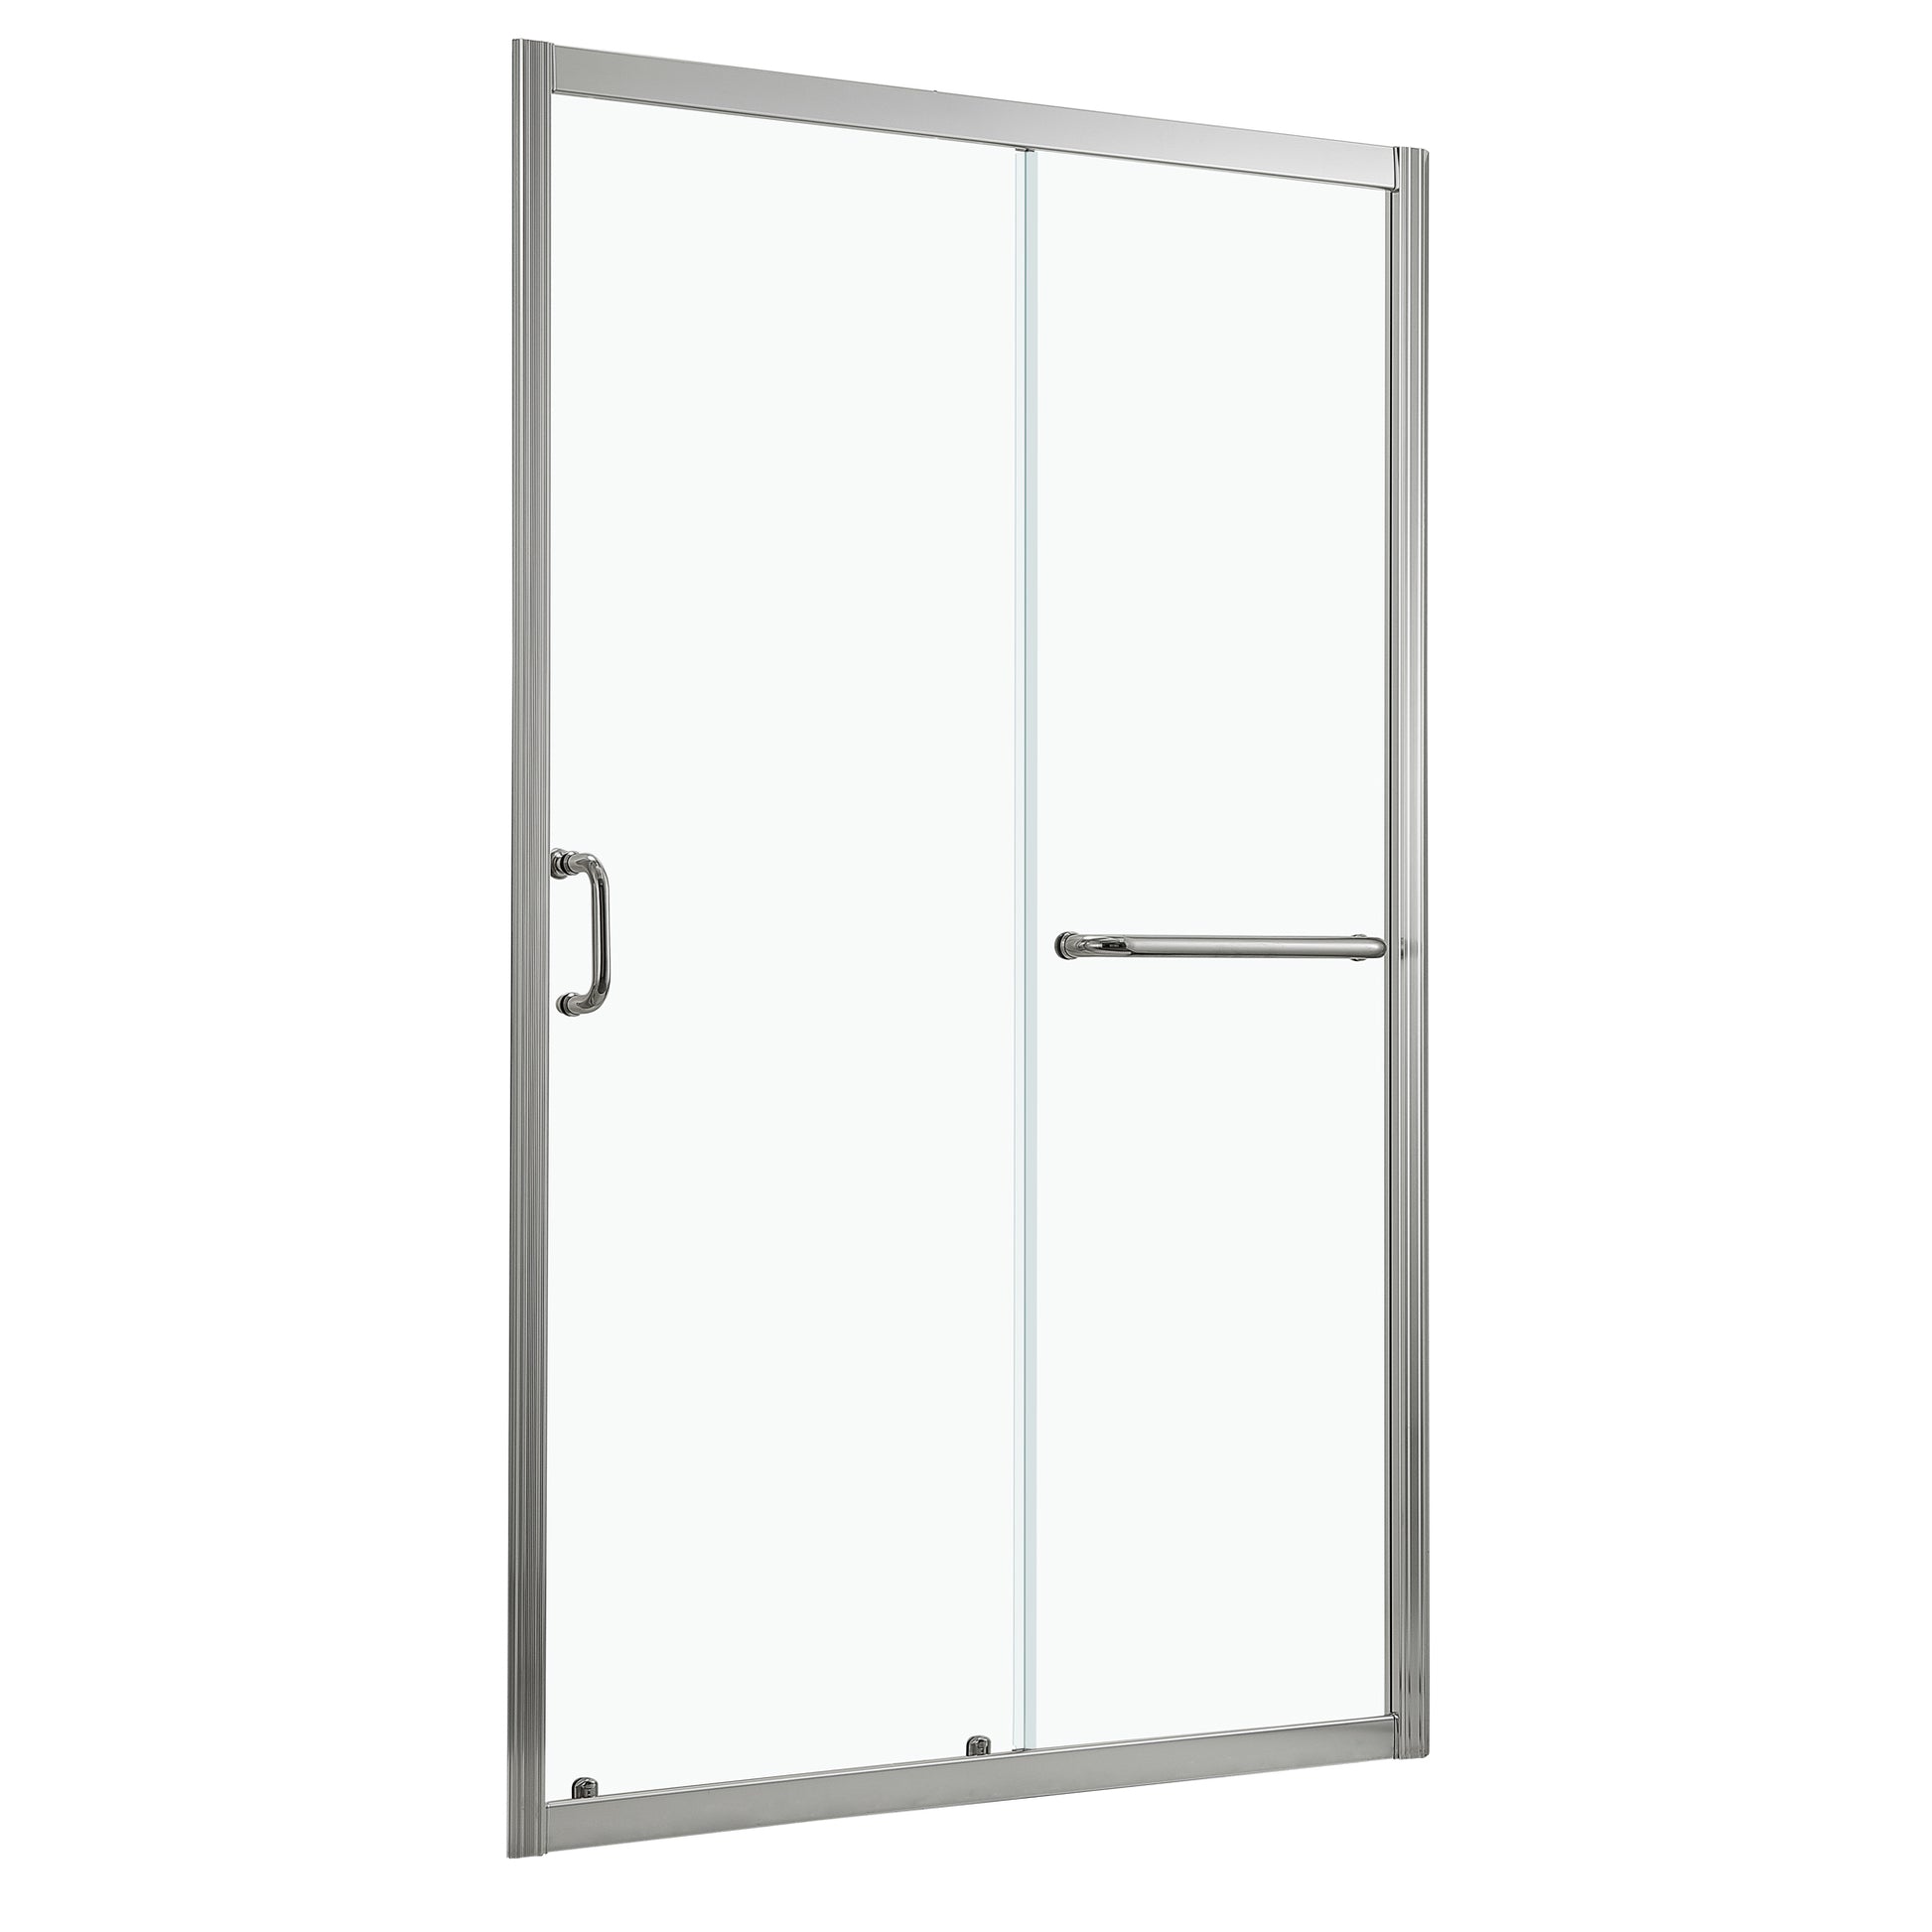 Shower Door 48" W x 72"H Single Sliding Bypass Shower brushed nickel-glass